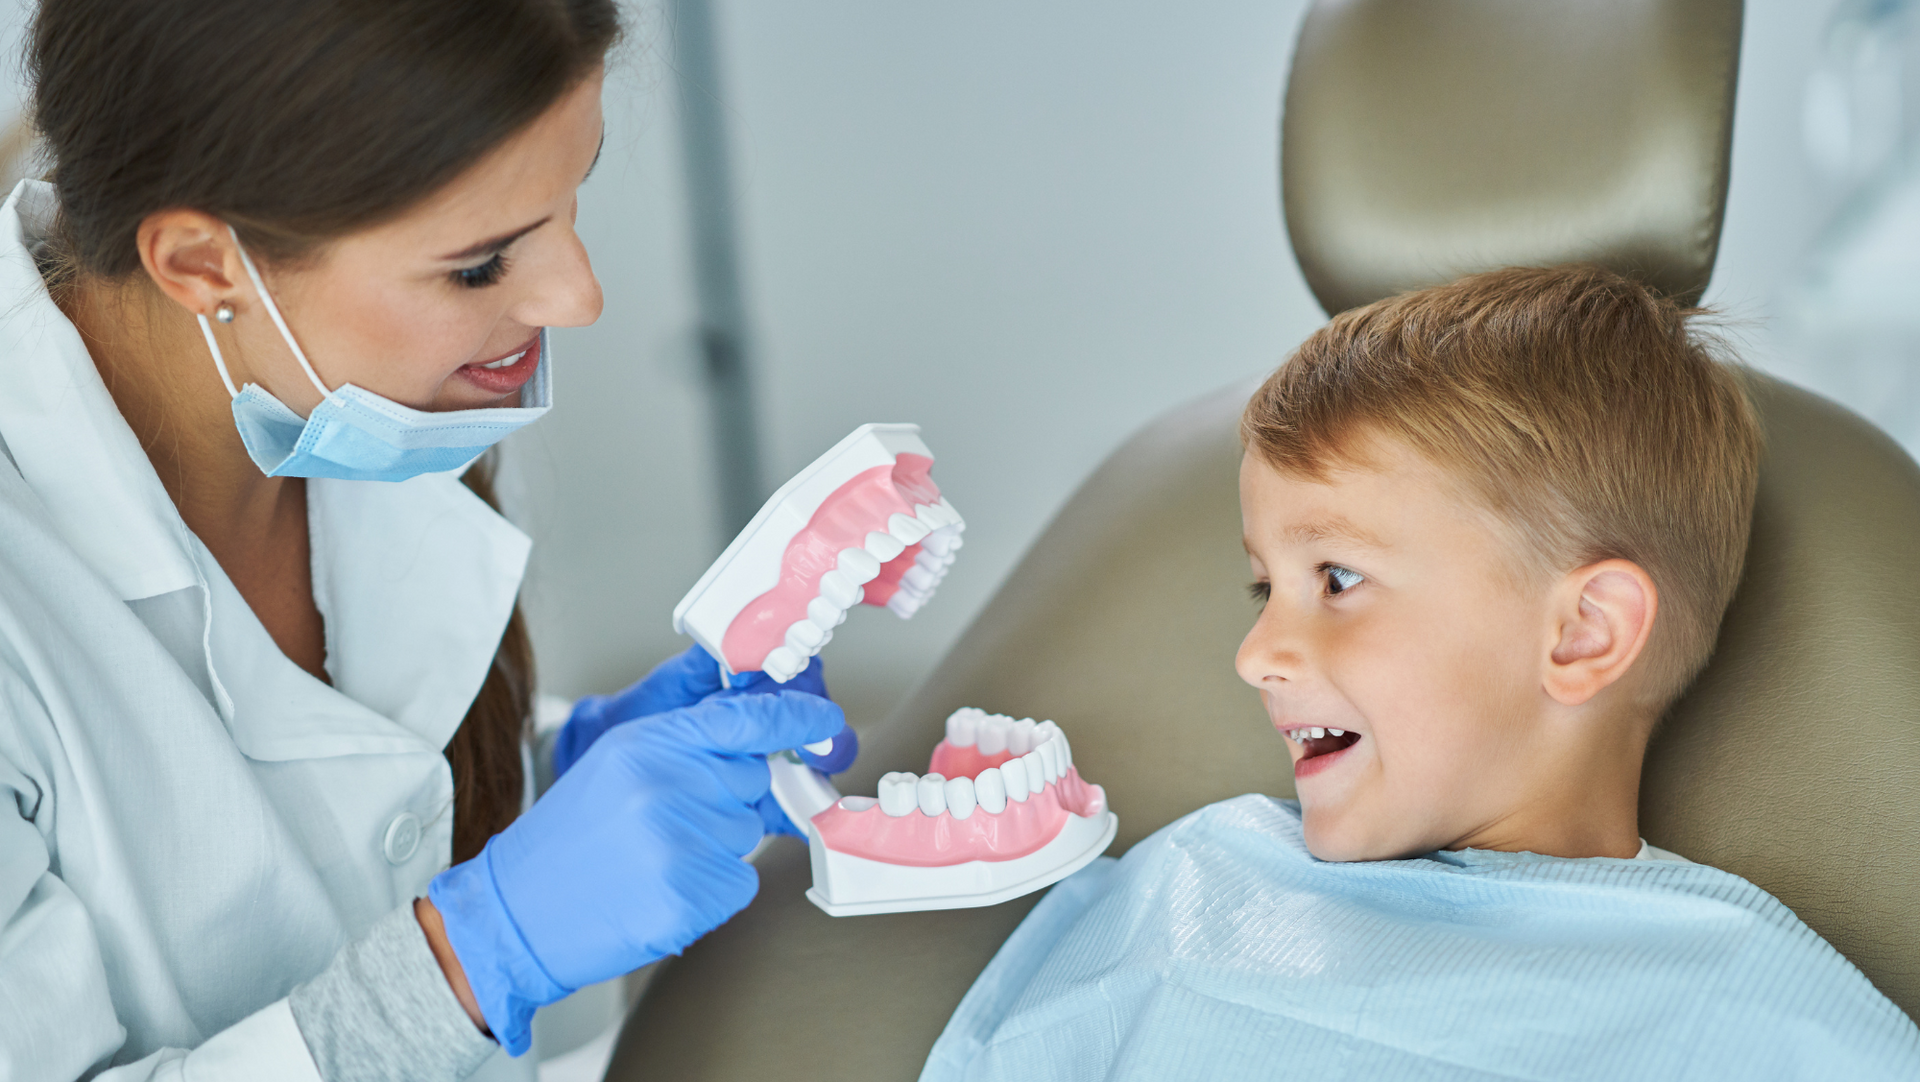 Child's first dental visit